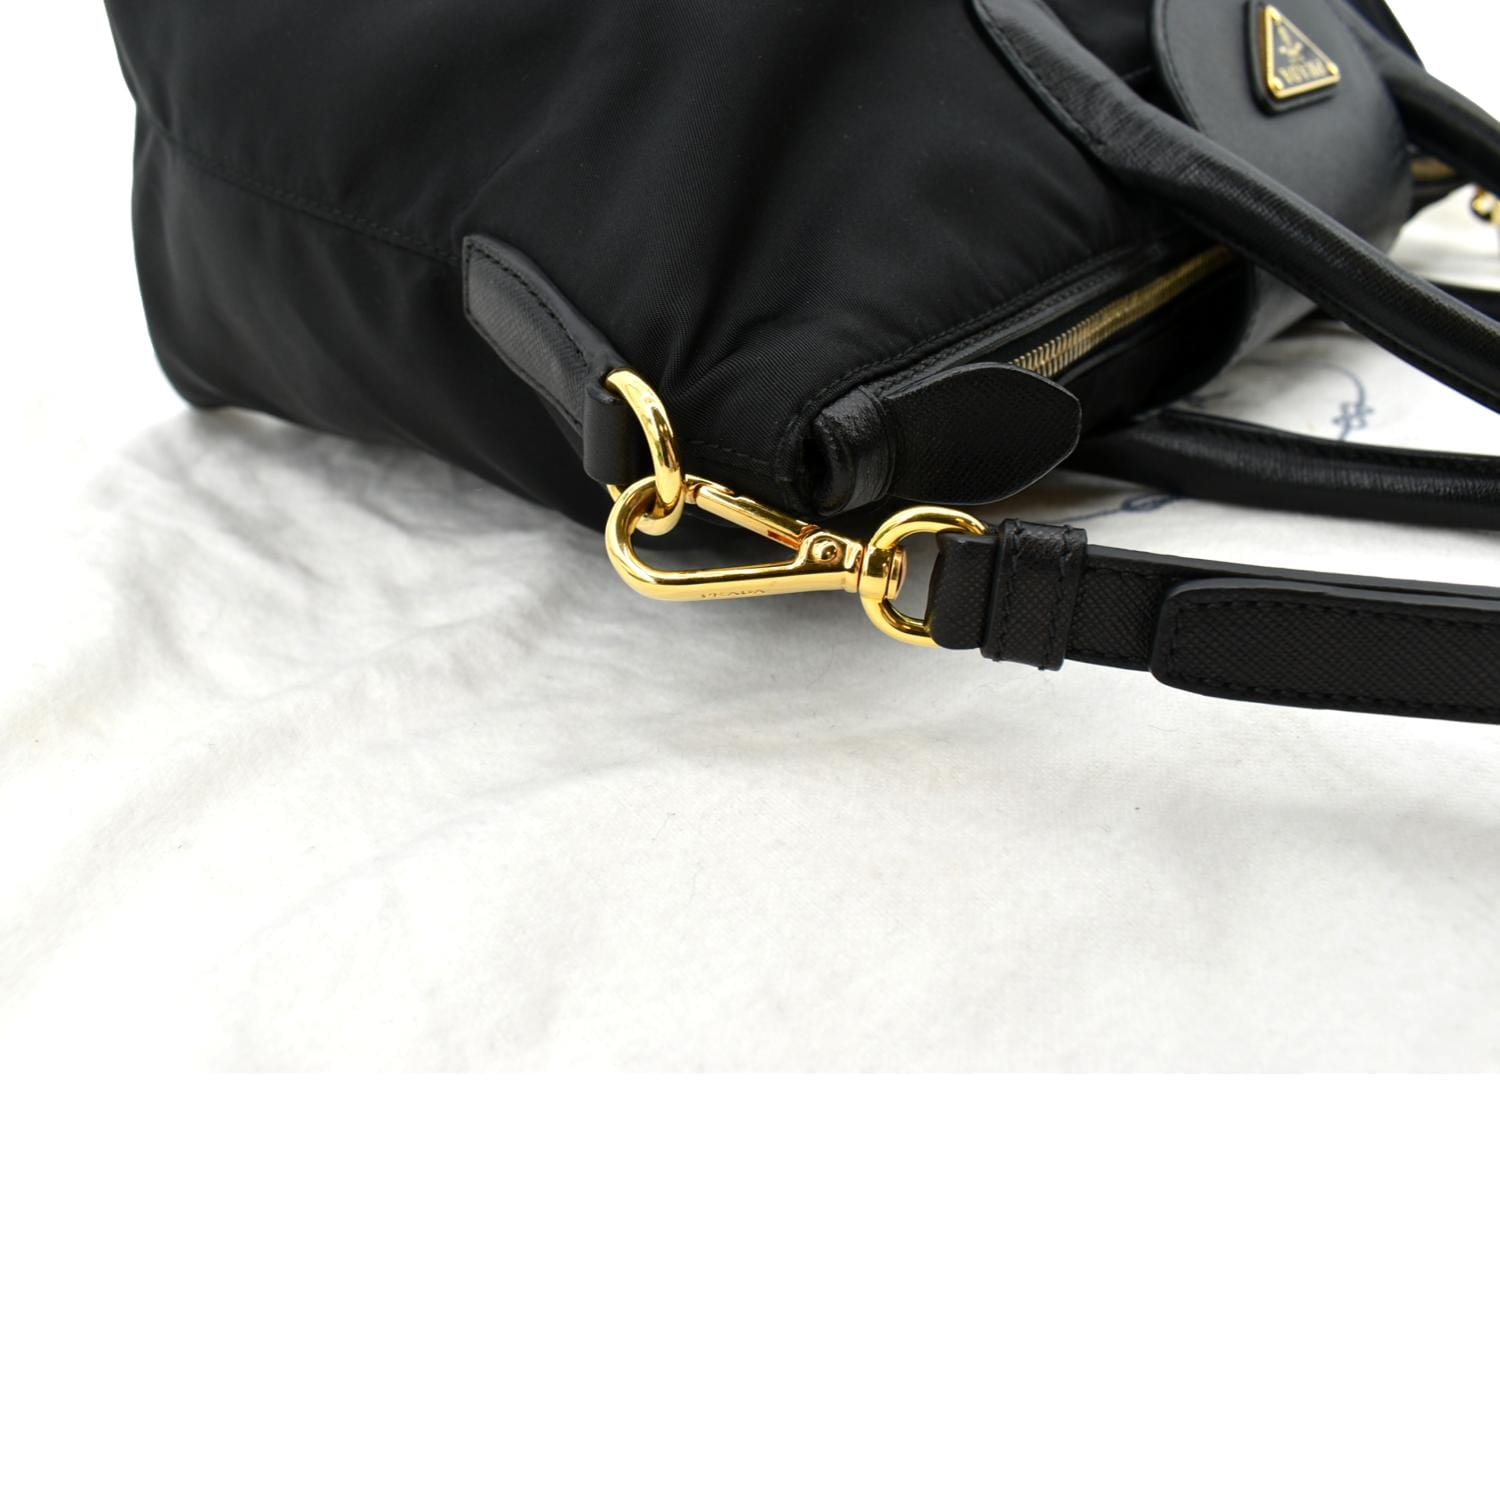 Prada Black Tessuto Nylon And Saffiano Leather Tote Bag Prada